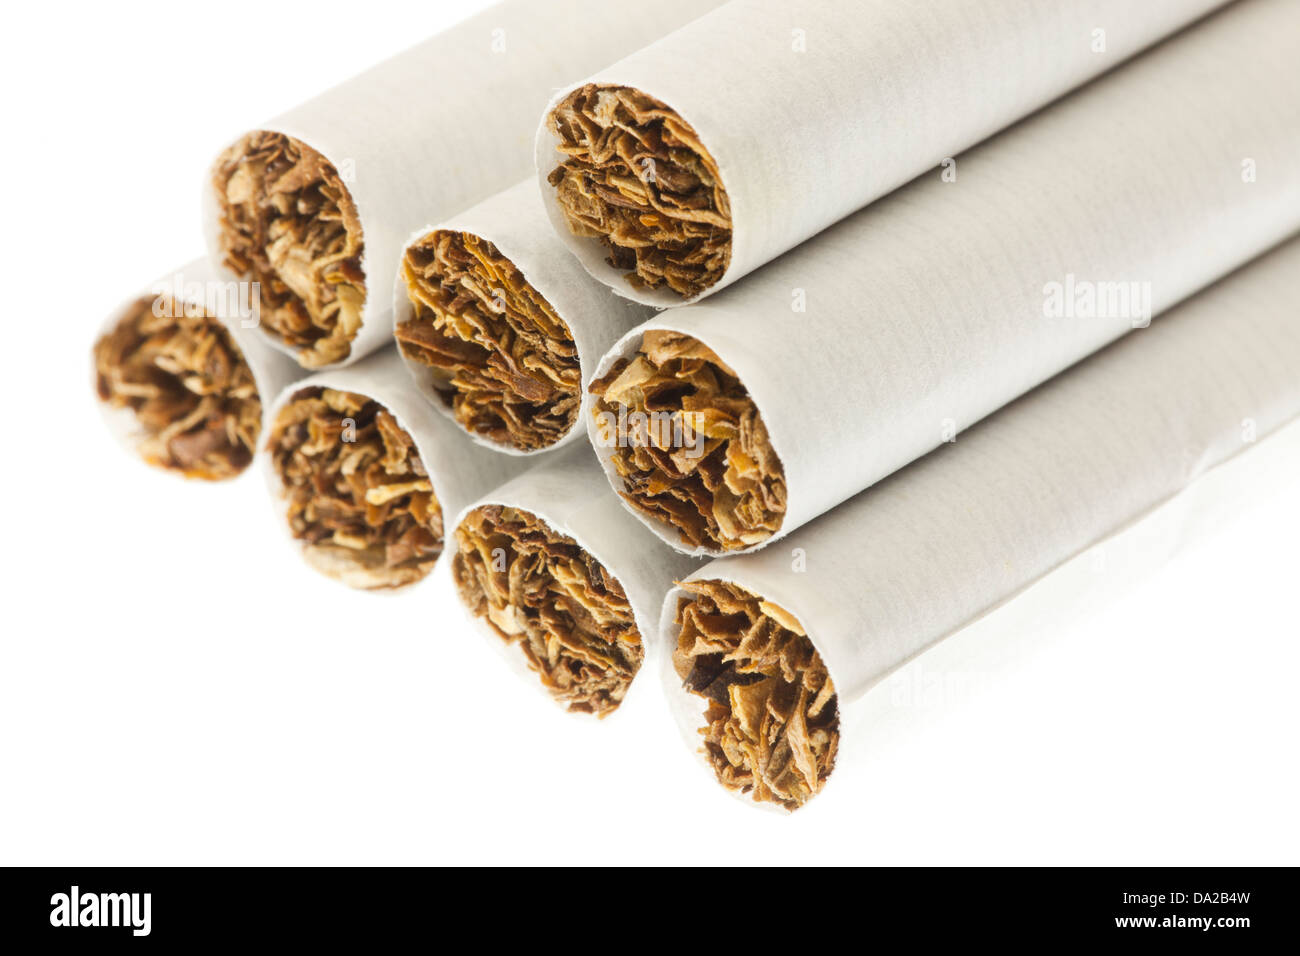 Zigaretten closeup auf Weiß (Tabak, Zigarette, Zigaretten) - USA Stockfoto